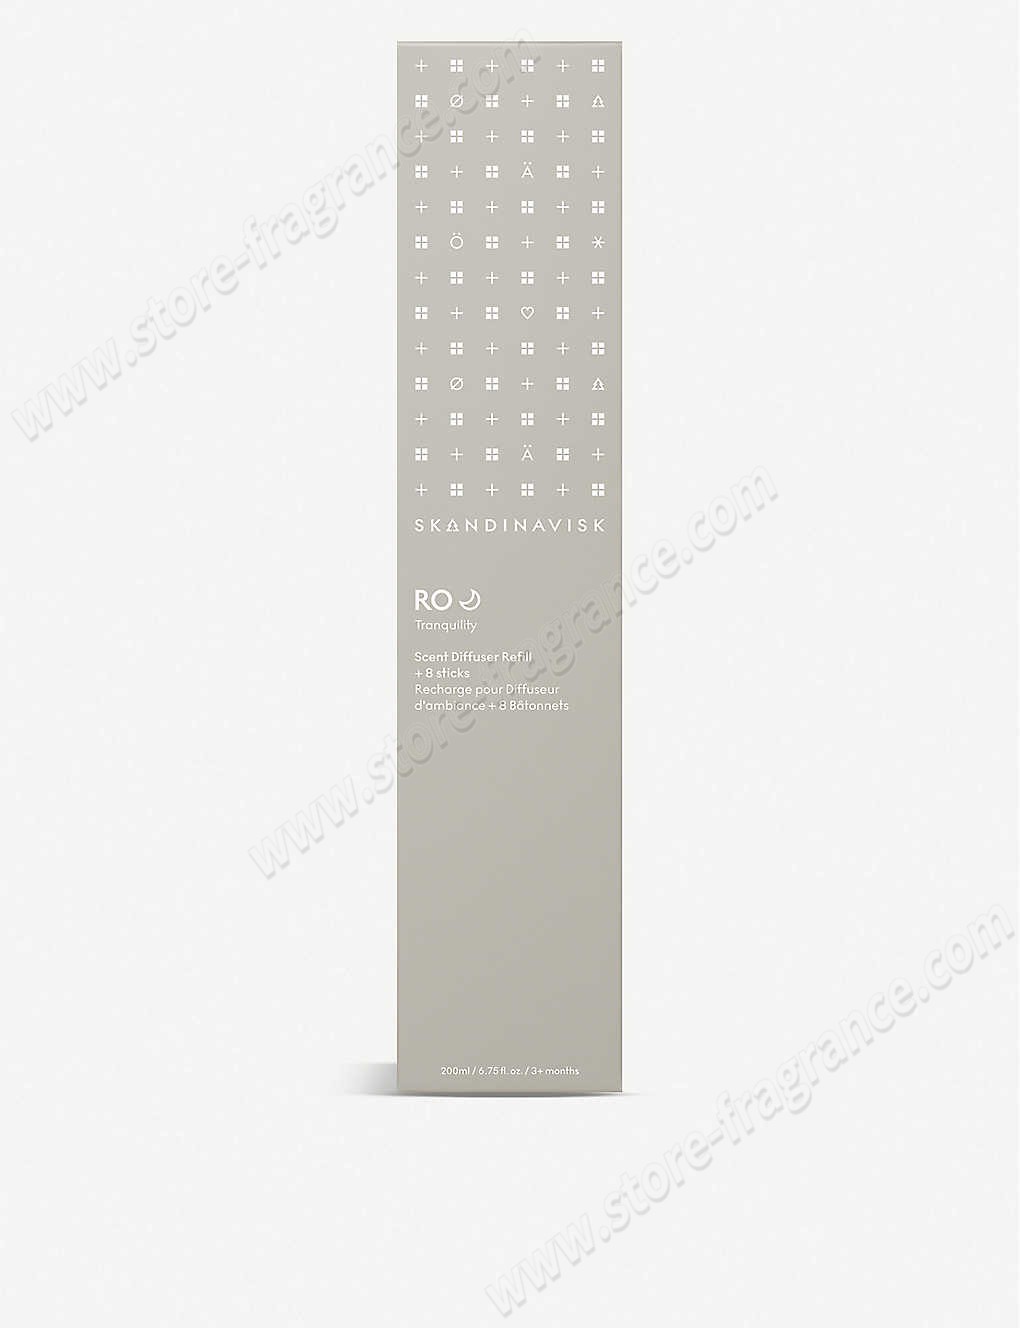 SKANDINAVISK/RO scented reed diffuser refill 200ml ✿ Discount Store - -1